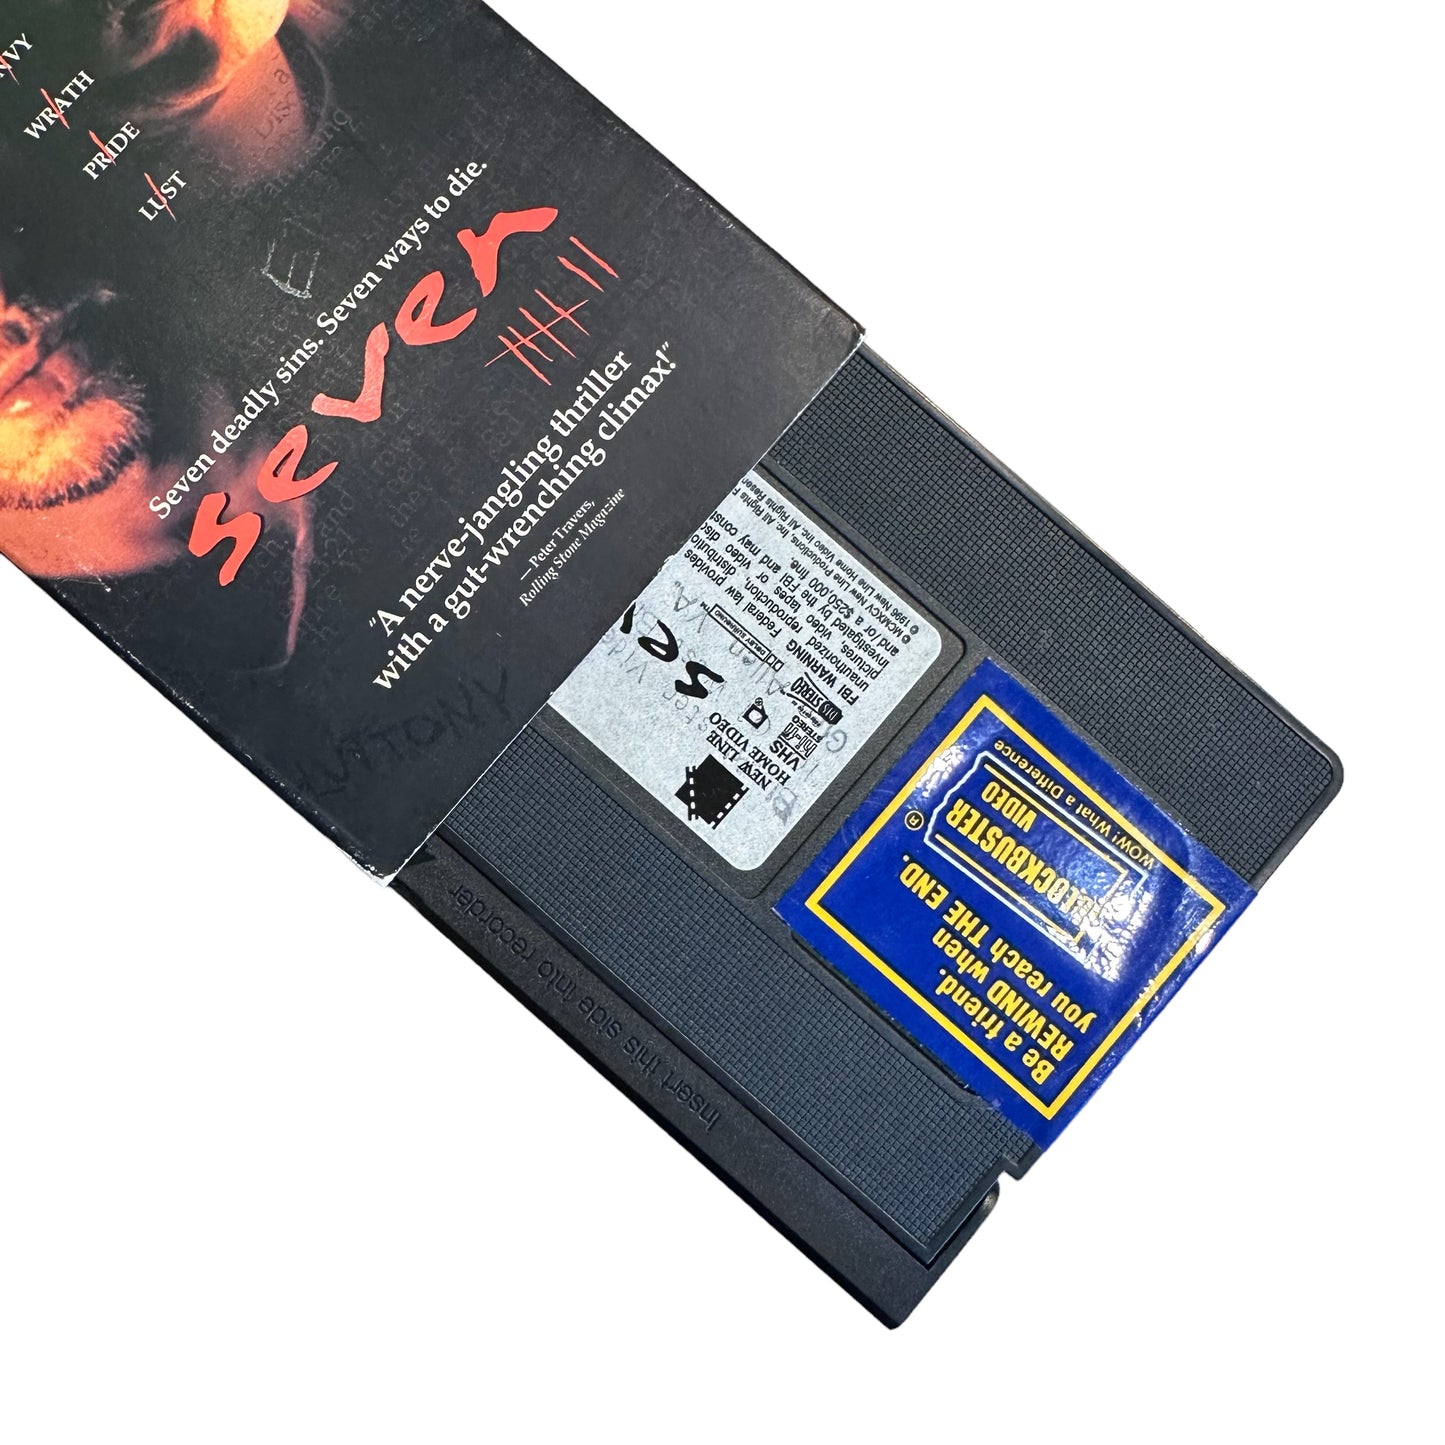 VHS ビデオテープ 輸入版 セブン seven 海外版 USA アメリカ ヴィンテージ ビデオ 紙ジャケ